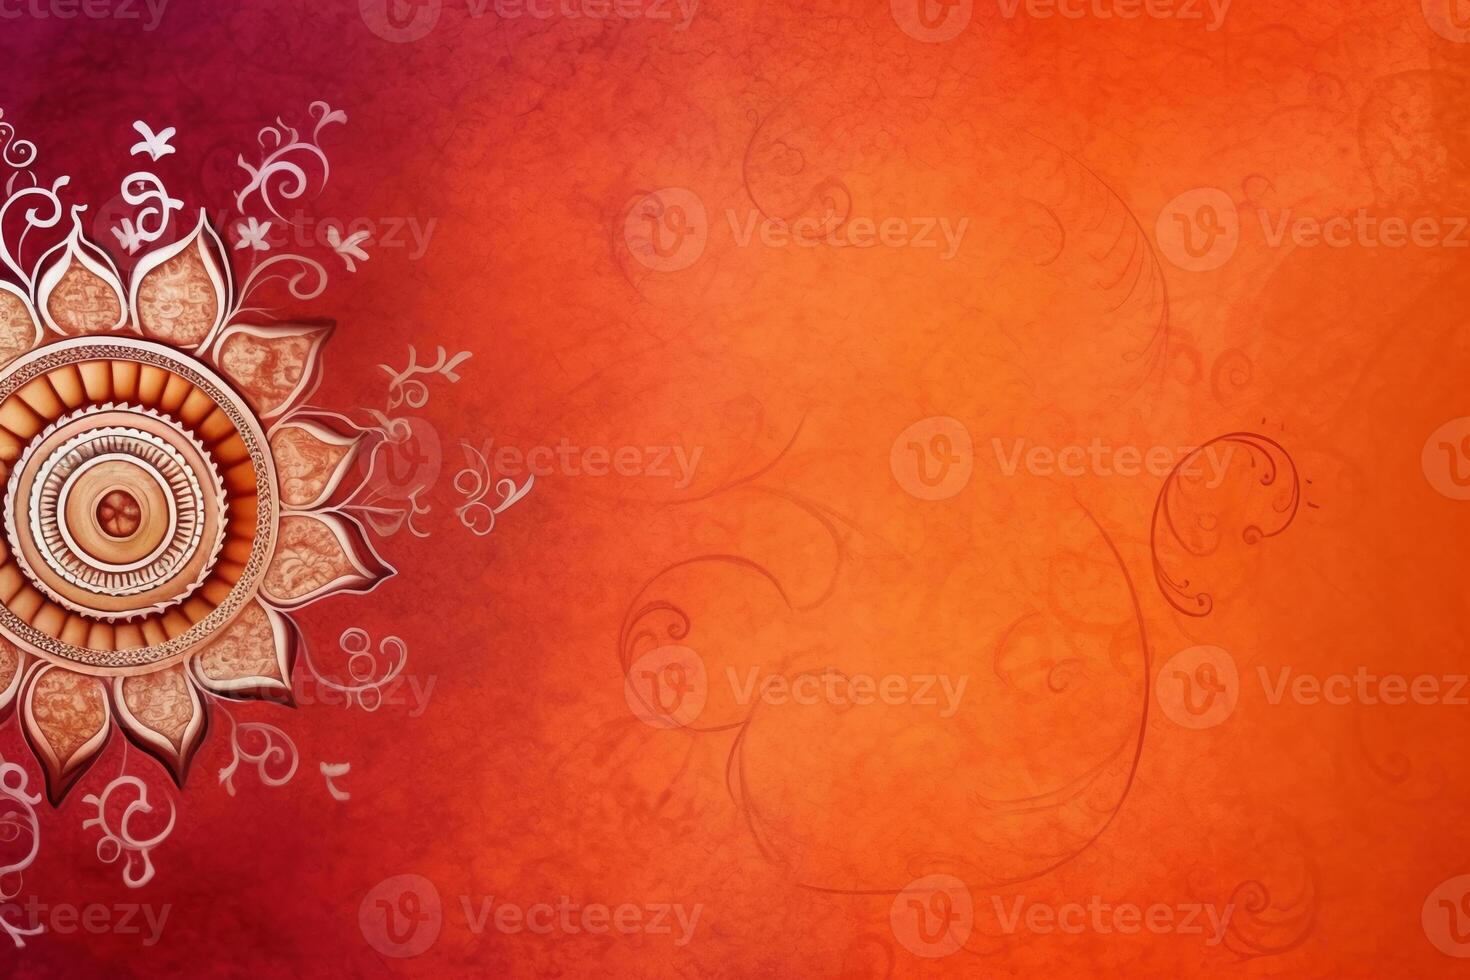 oranje pantone kleur achtergrond papier structuur rangoli patroon schilderen. ai generatief foto